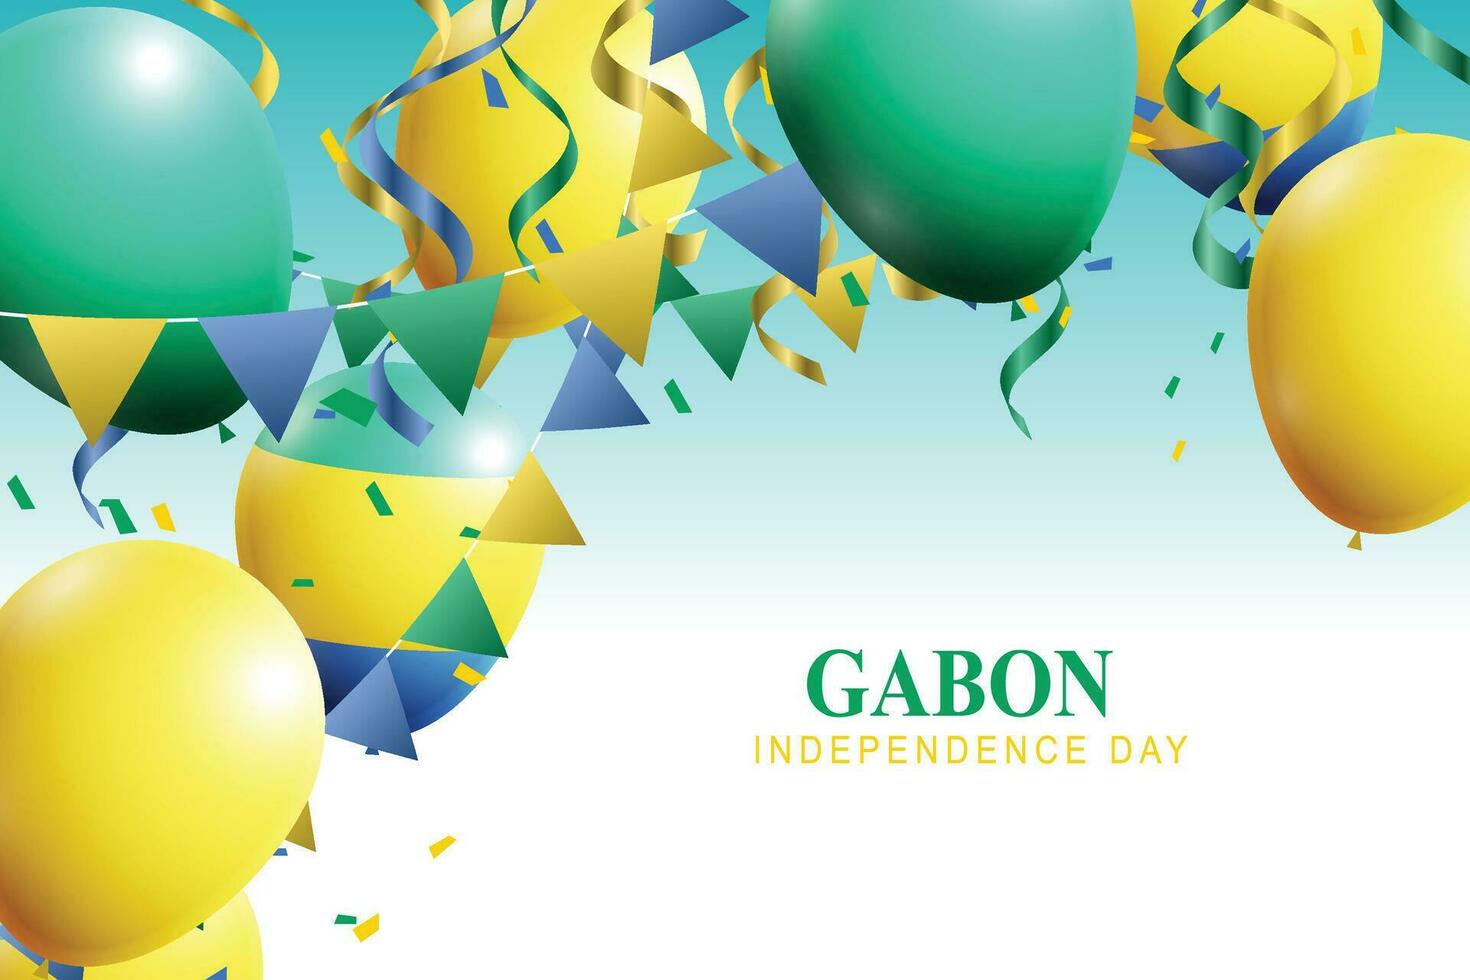 Gabon Independence Day background. vector